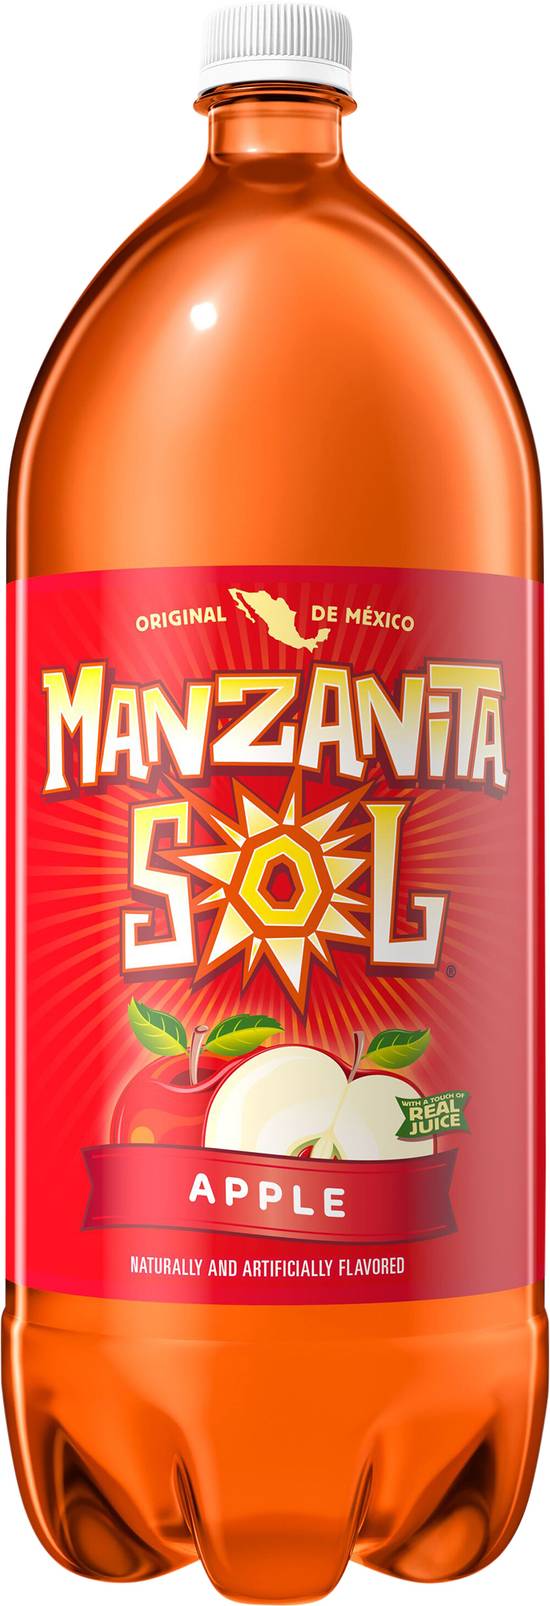 Manzanita Sol Apple Flavored Soda (2 L)